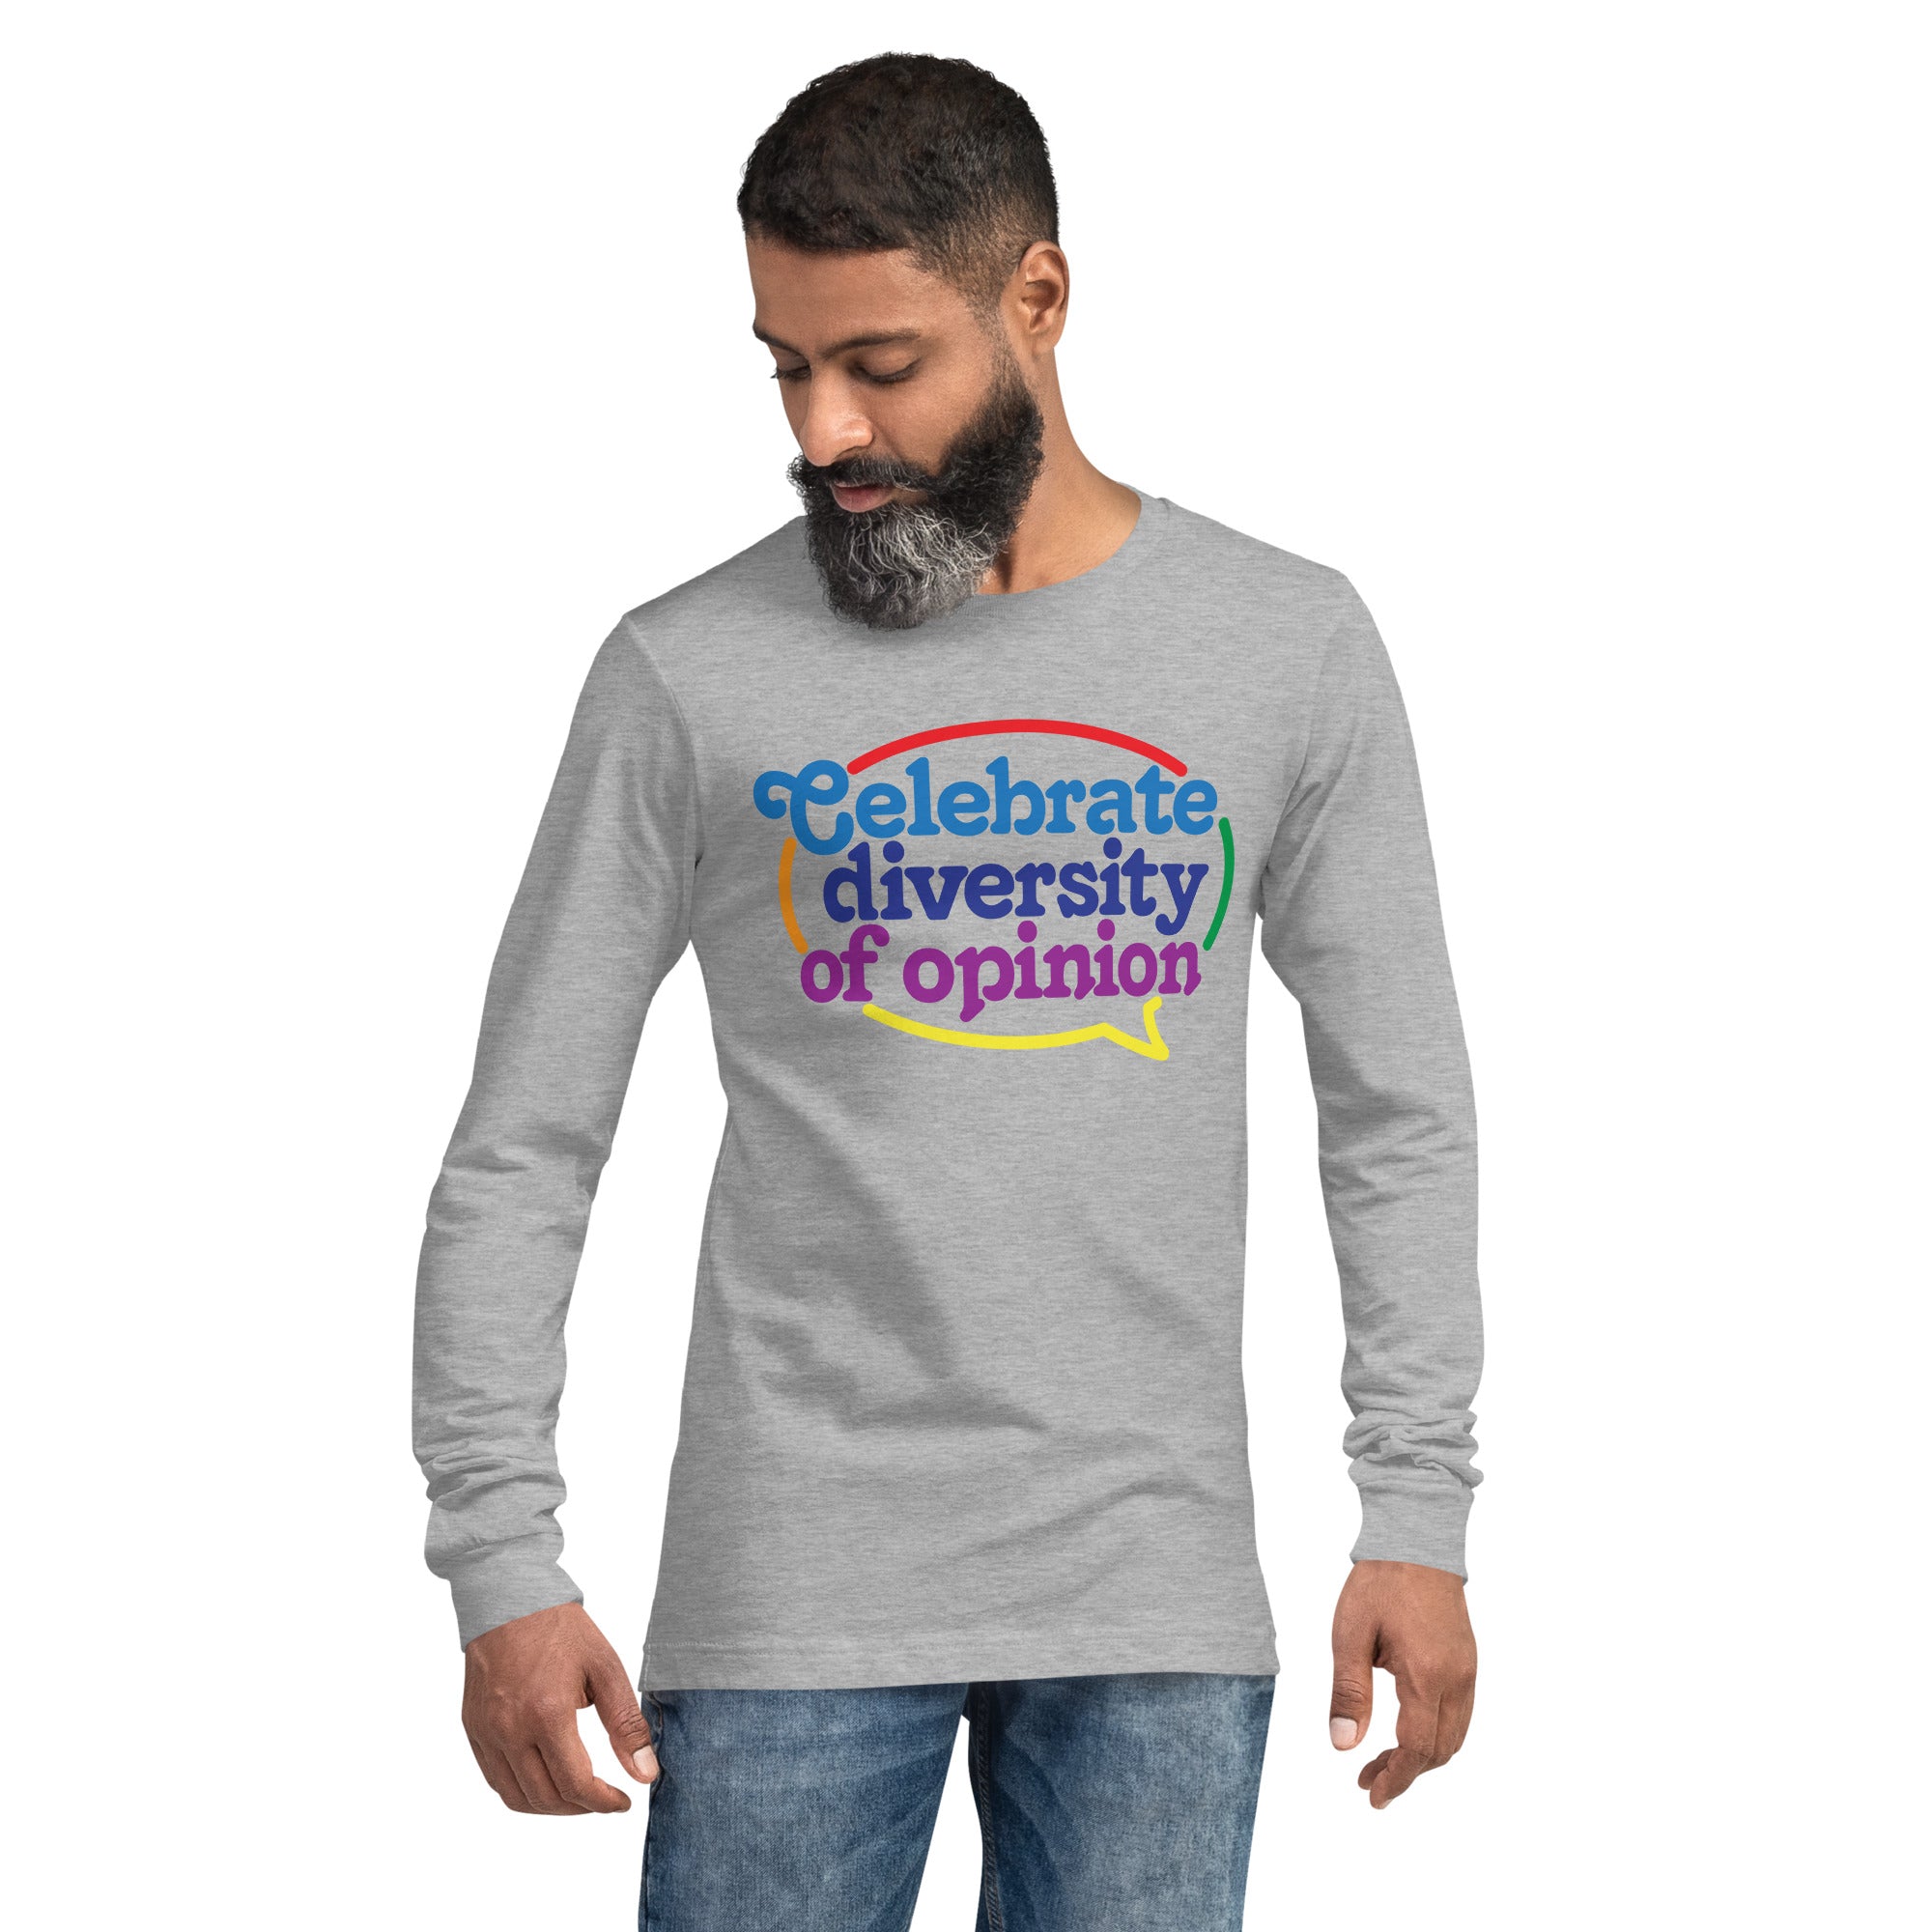 Celebrate Diversity of Opinion Long Sleeve T-Shirt